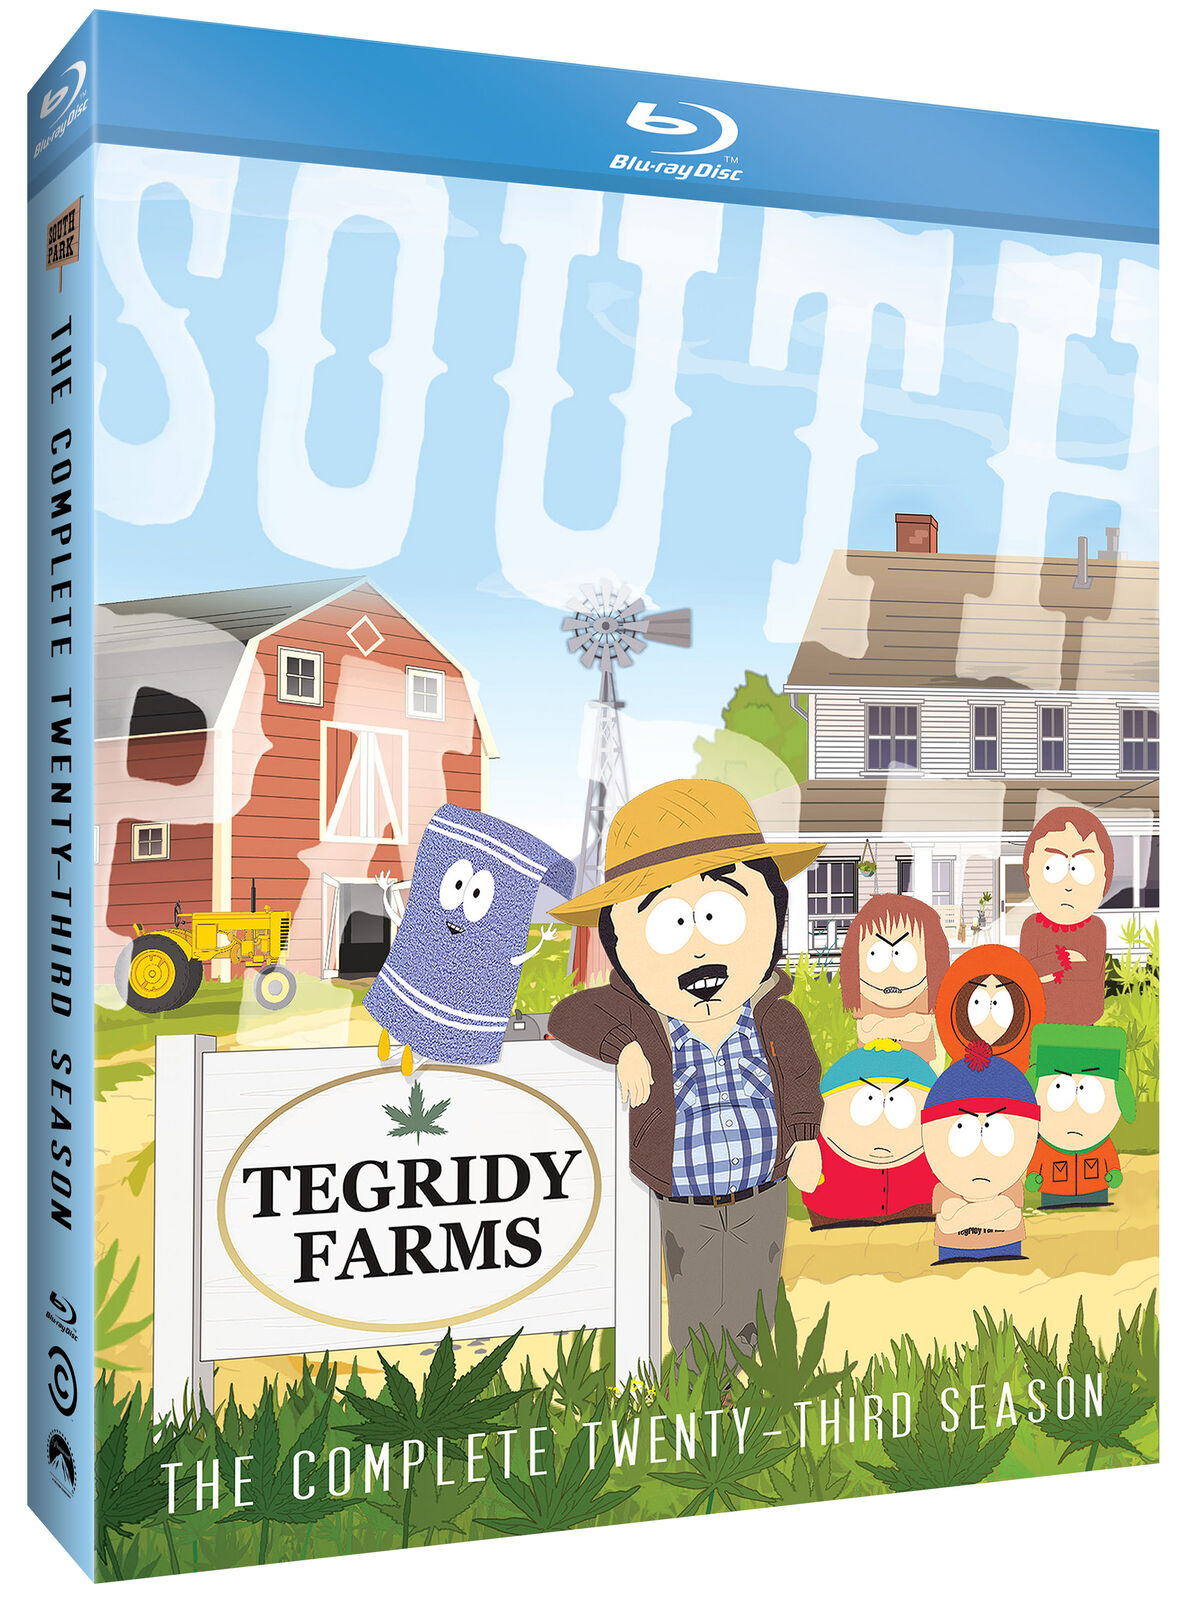 Tegridy Wins with 'South Park: The Complete Twenty-Third Season' on DVD/Blu- ray | Fandom